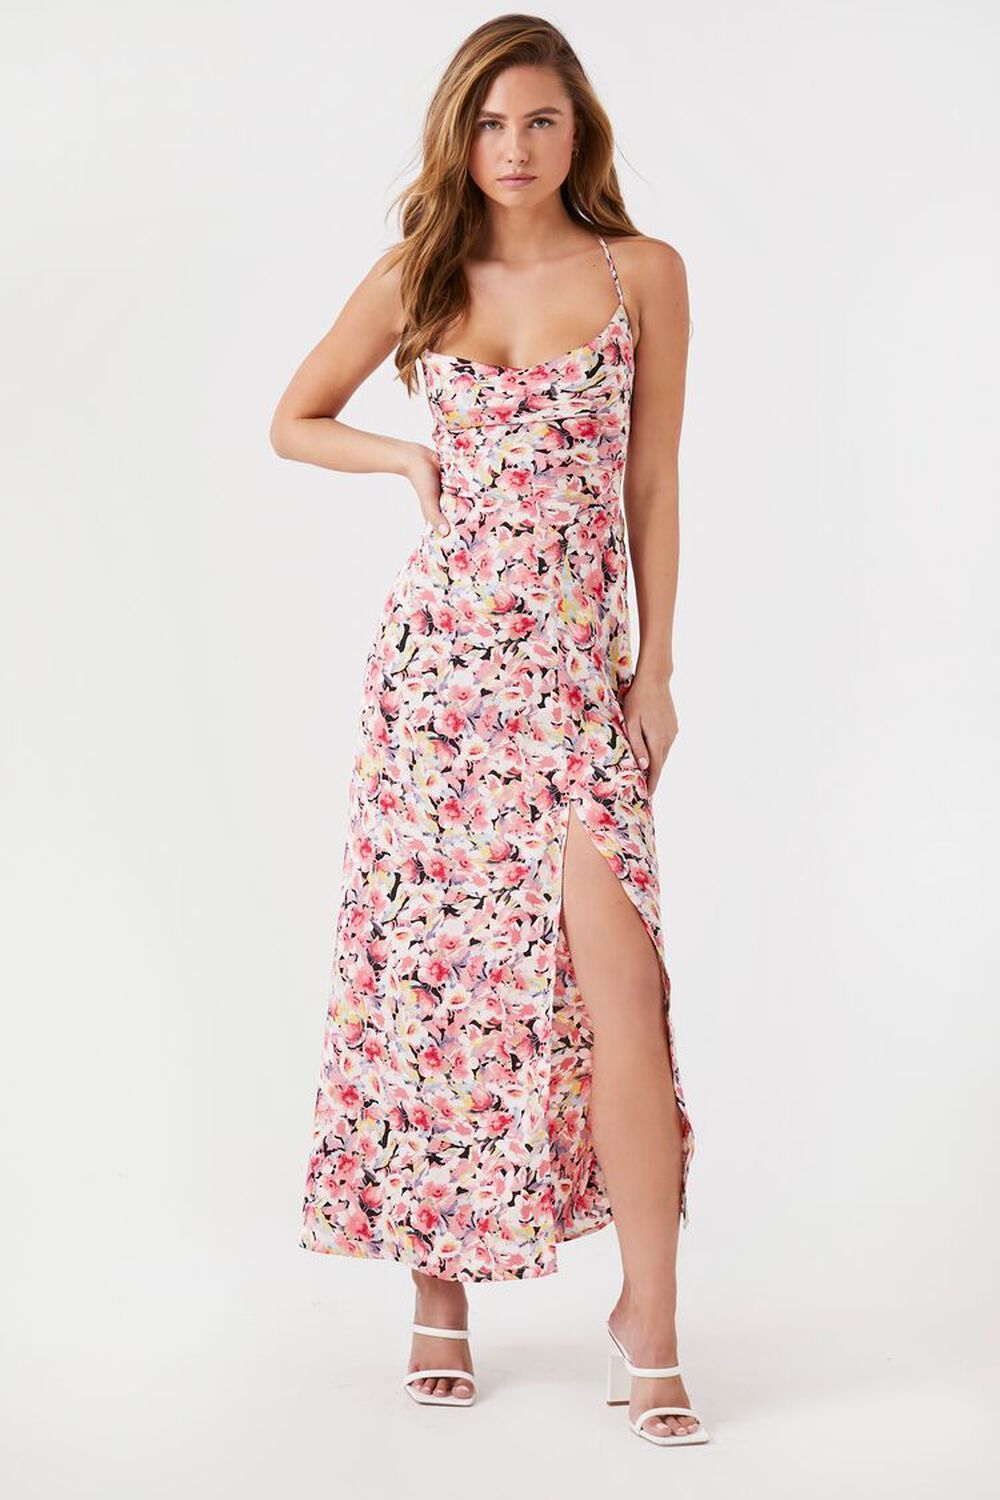 Floral Print Lace-Back Dress | Forever 21 (US)